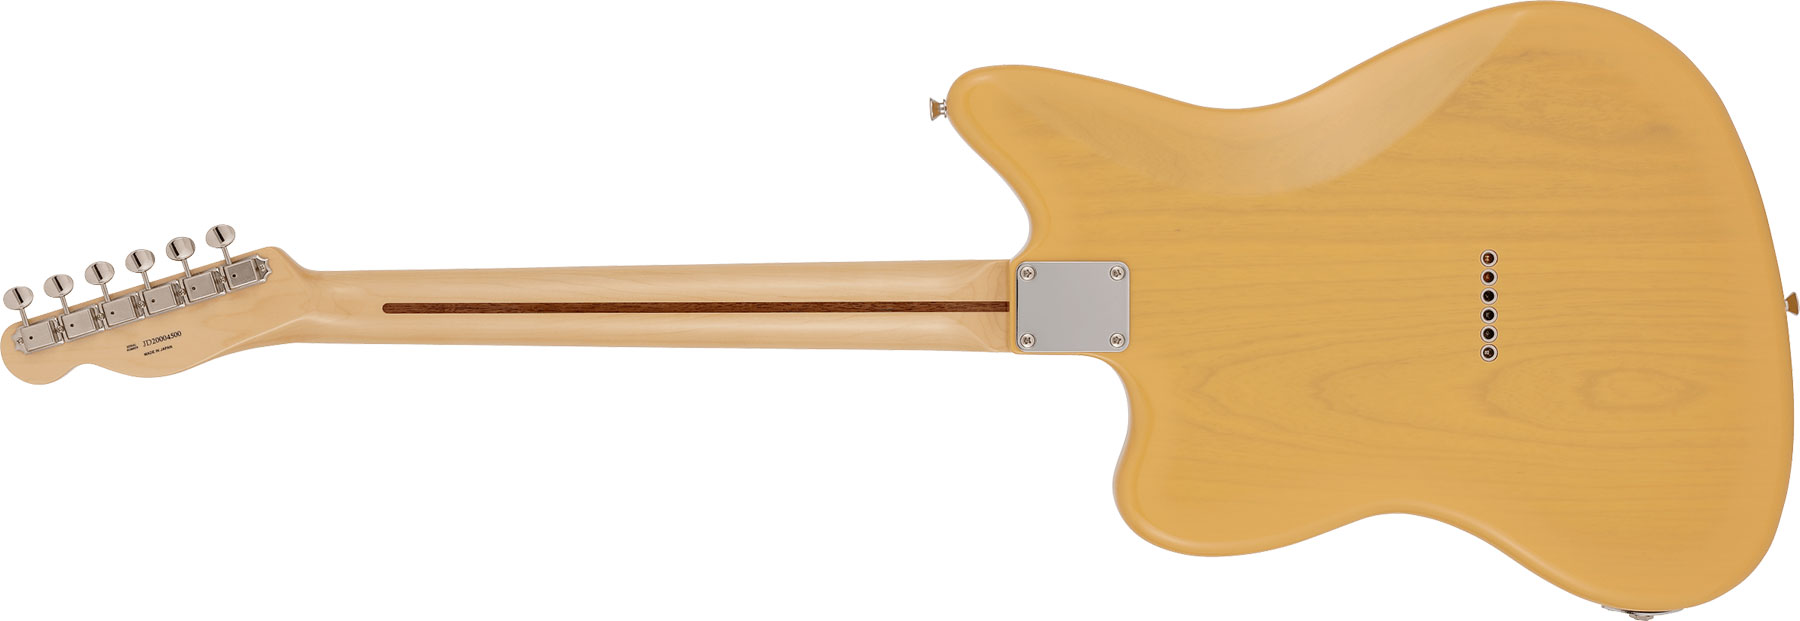 Fender Tele Offset Ltd Jap 2s Ht Mn - Butterscotch Blonde - Retro-Rock-E-Gitarre - Variation 1